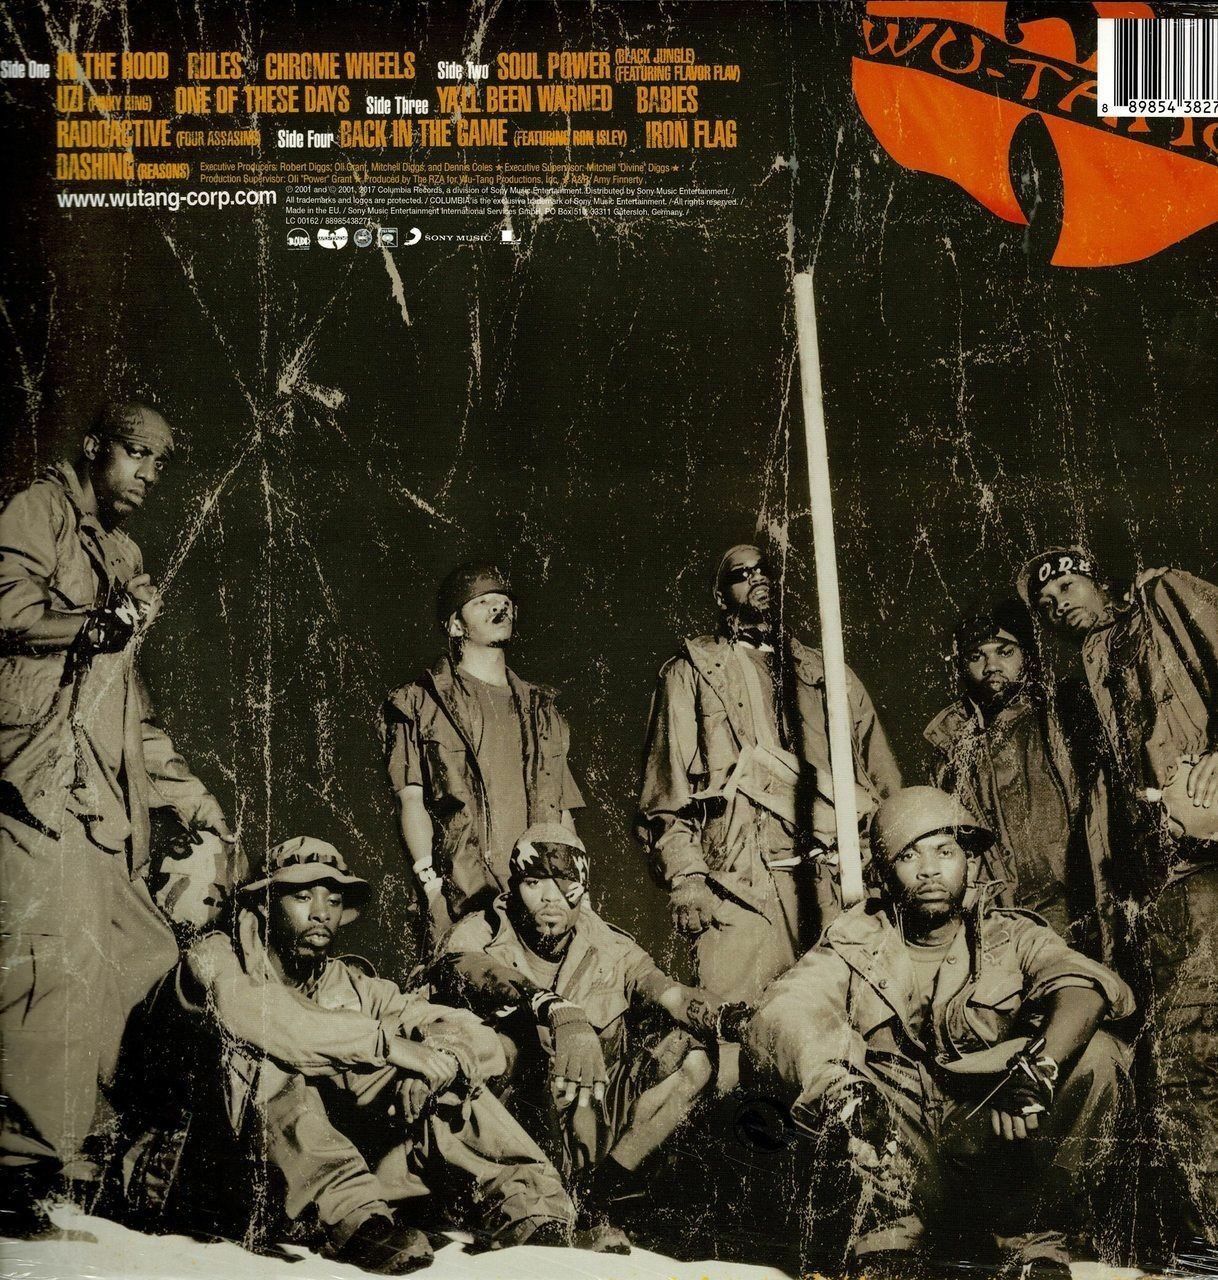 Wu-Tang Clan - Iron Flag - New Vinyl 2 LP +Download MP3 